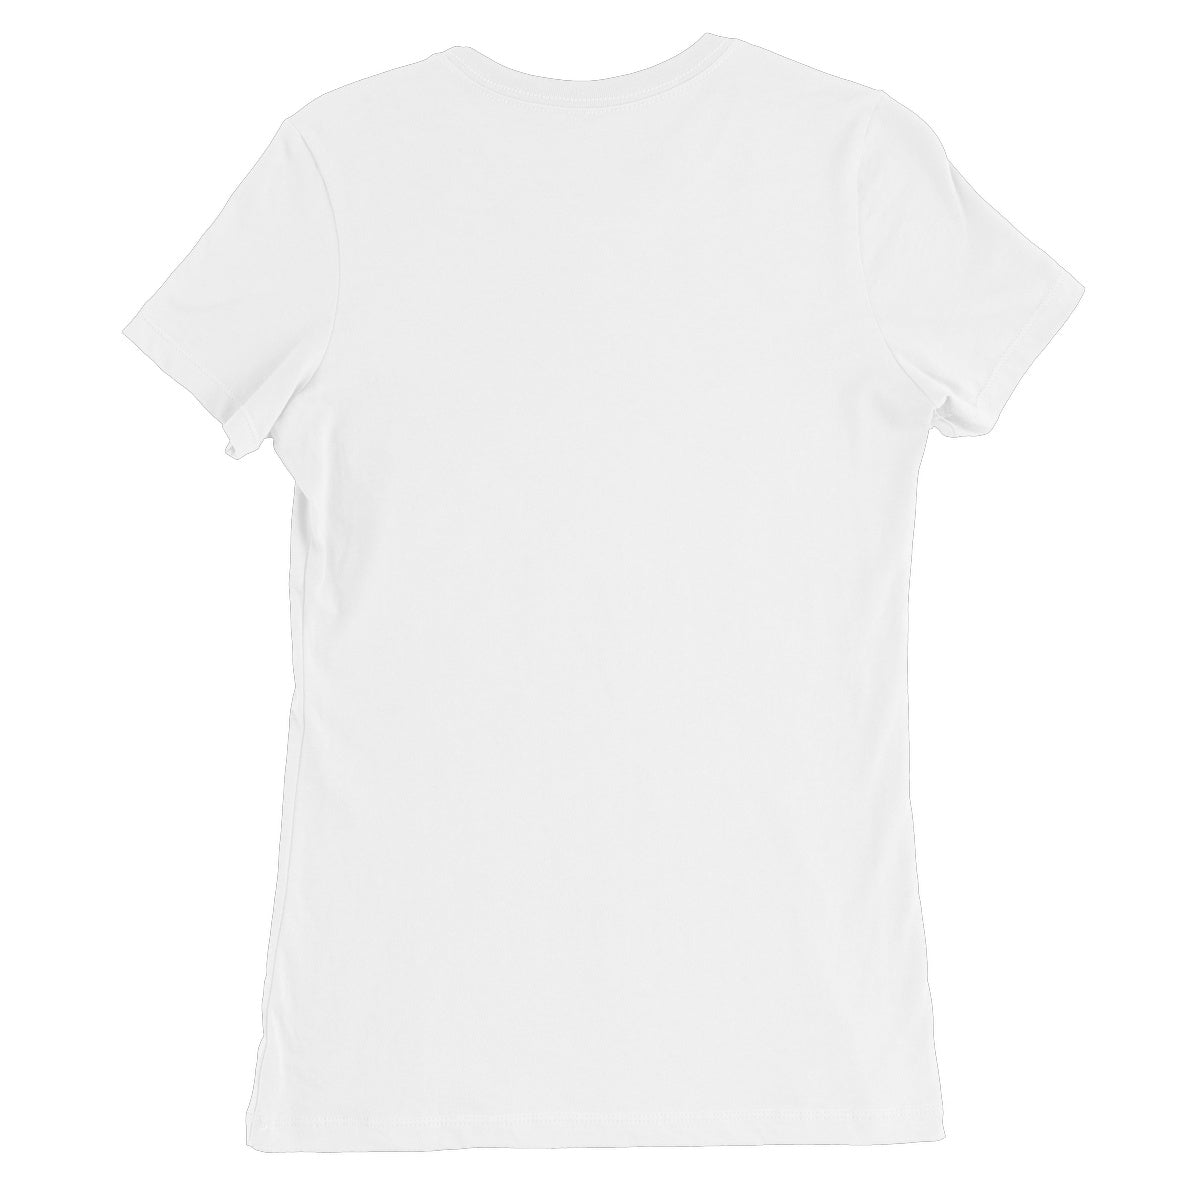 BLONDIE - DEBBIE HARRY #1 Women's Favourite T-Shirt